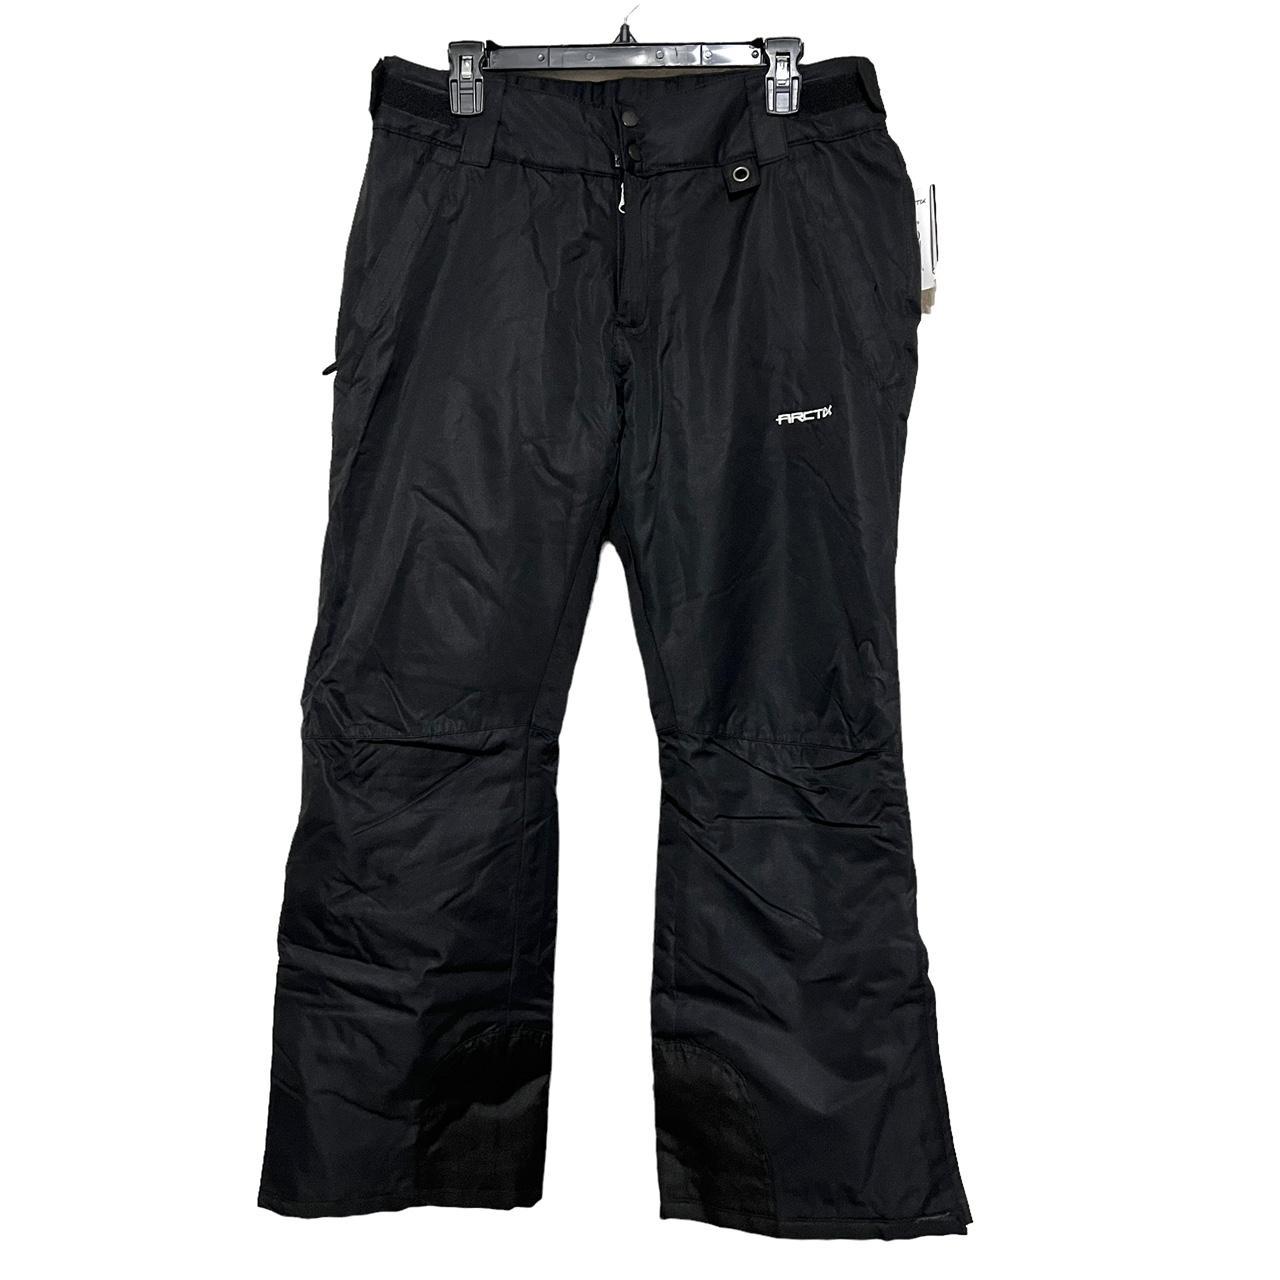 Black Snow Pants, Brand: Arctix, Size: Medium, Style